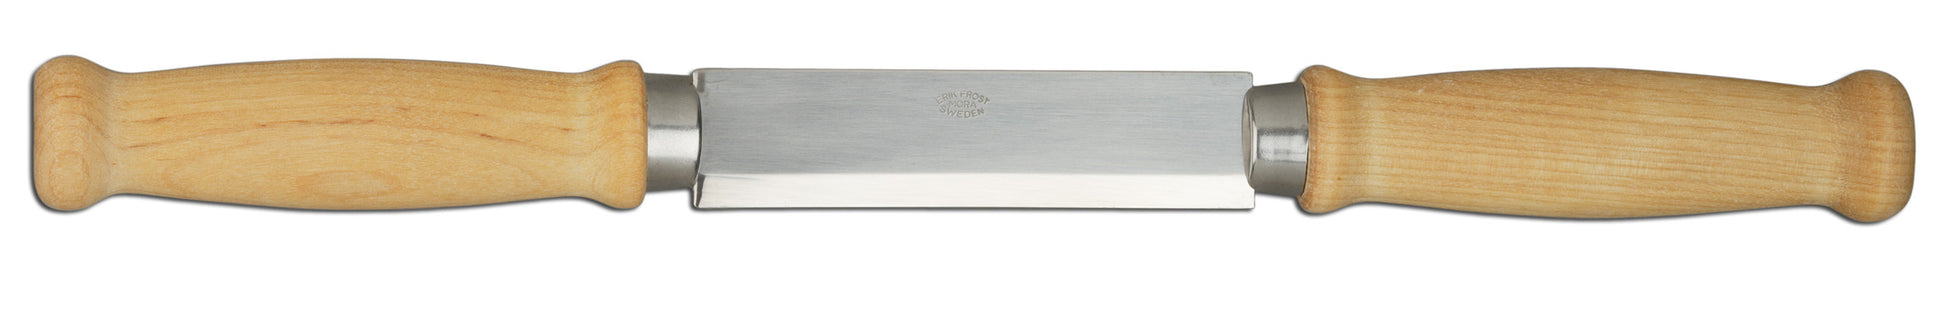 Mora Wood Splitter Knife Draw Knife